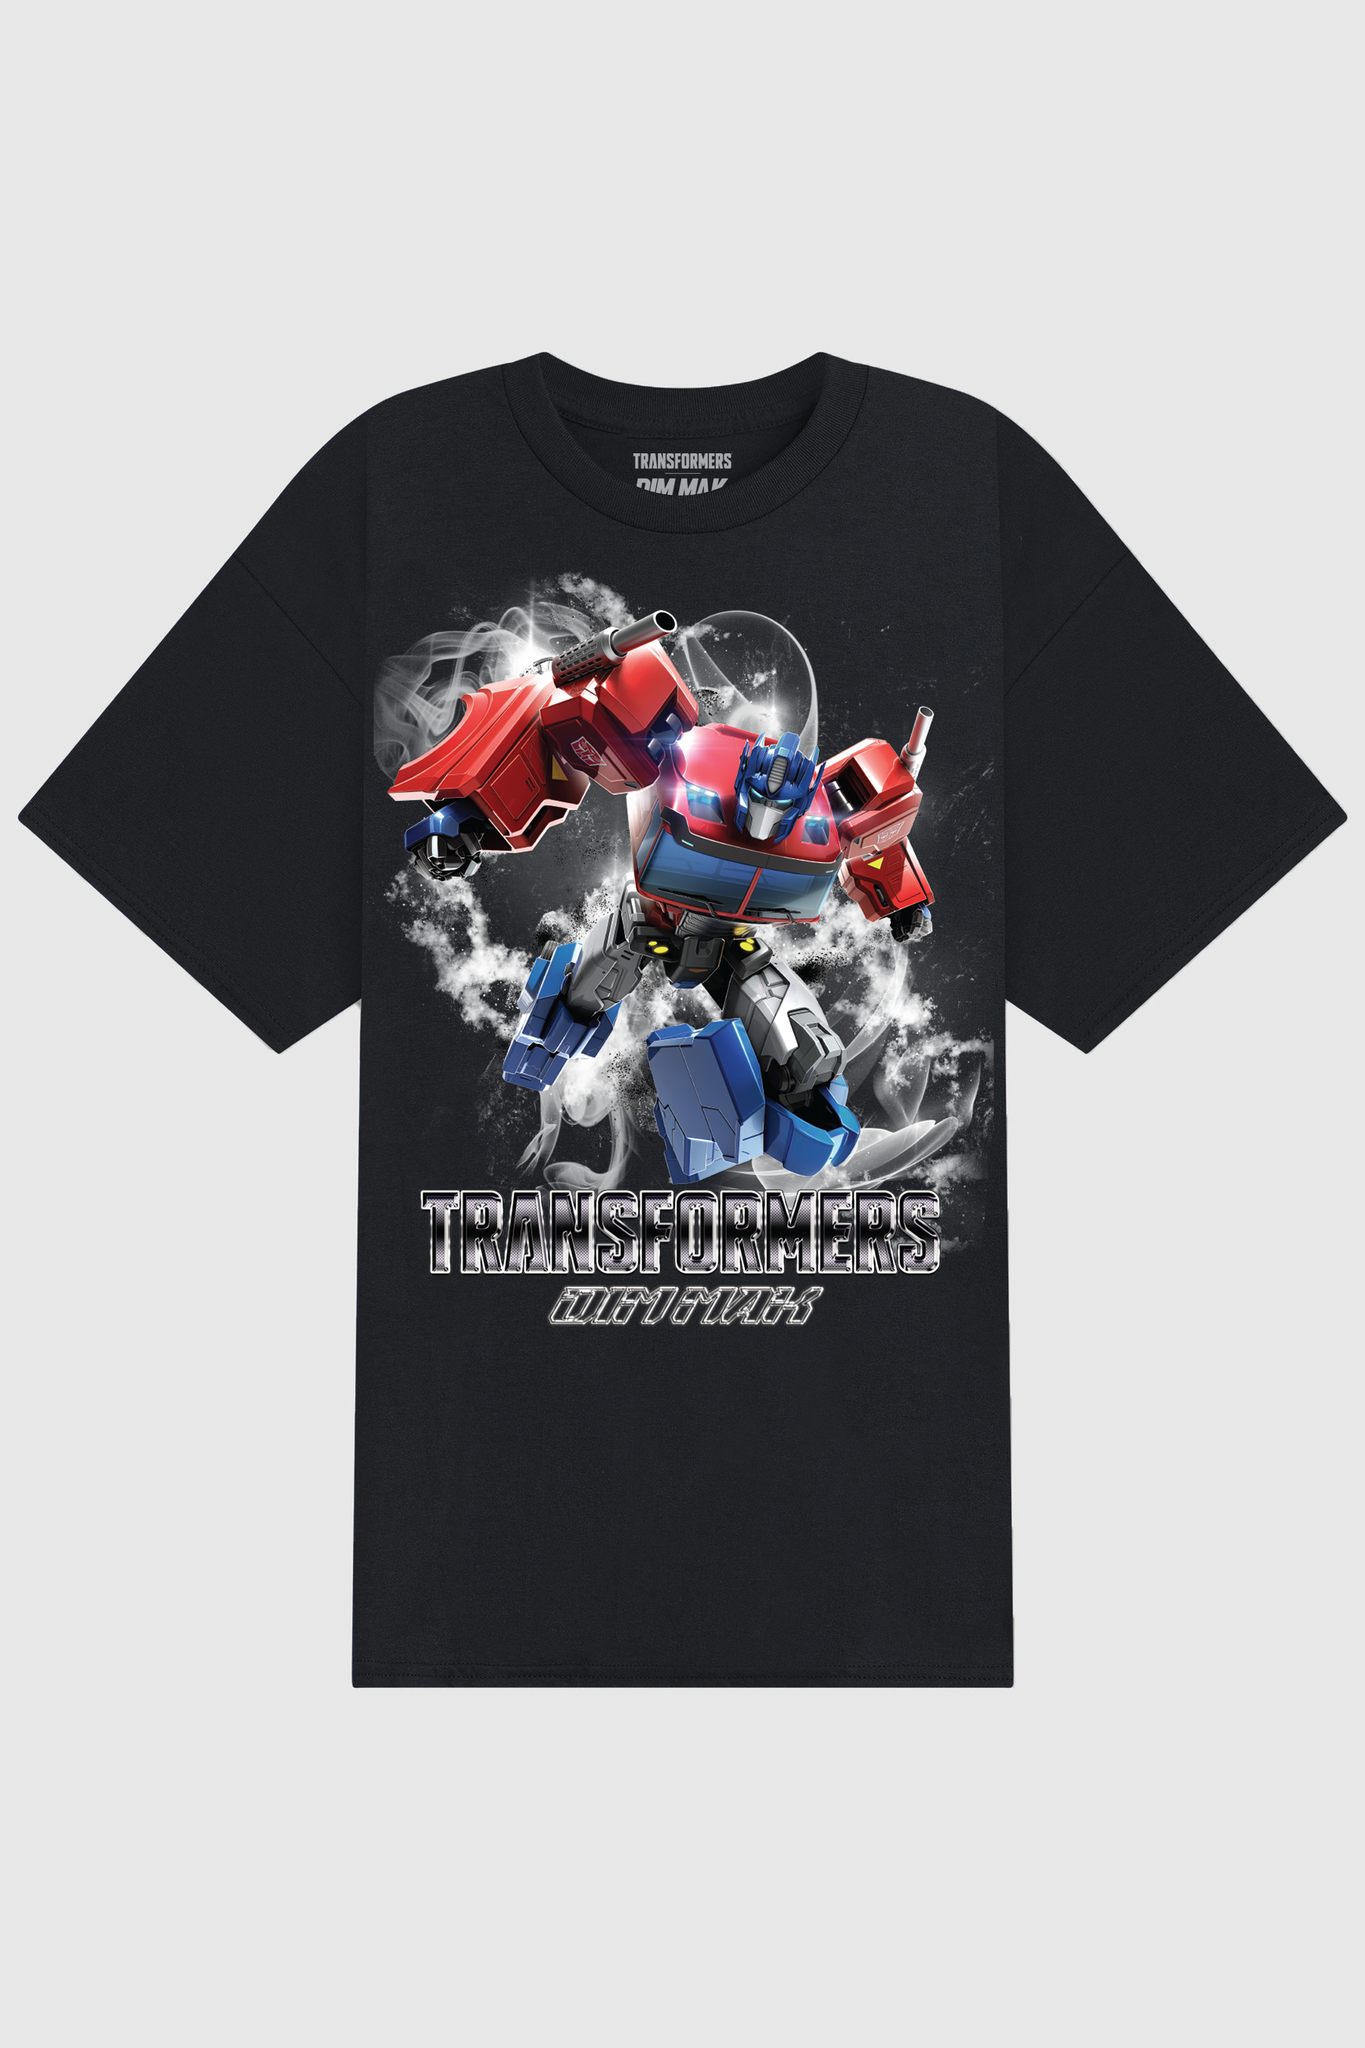 Dim Mak x Transformers - Optimus Prime T-shirt - Black